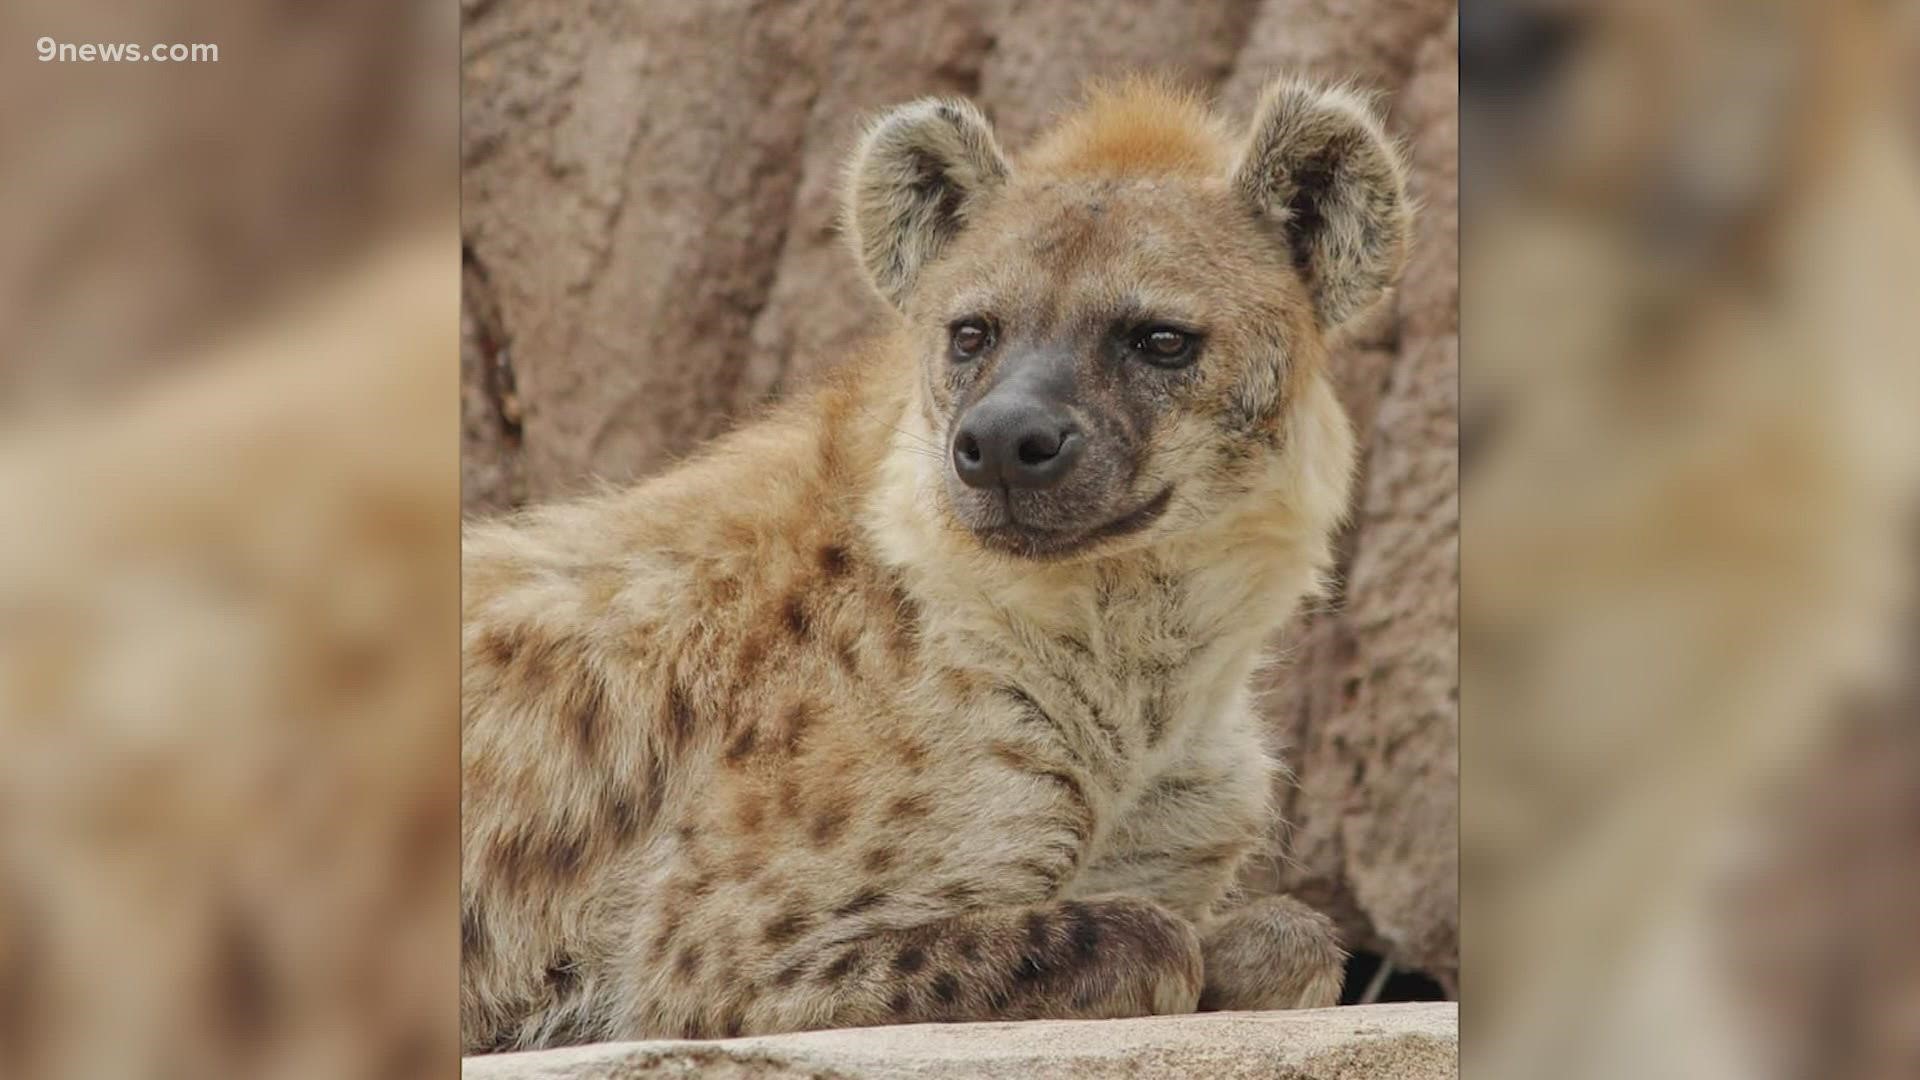 Zoo staff said the hyenas are experiencing mild symptoms.